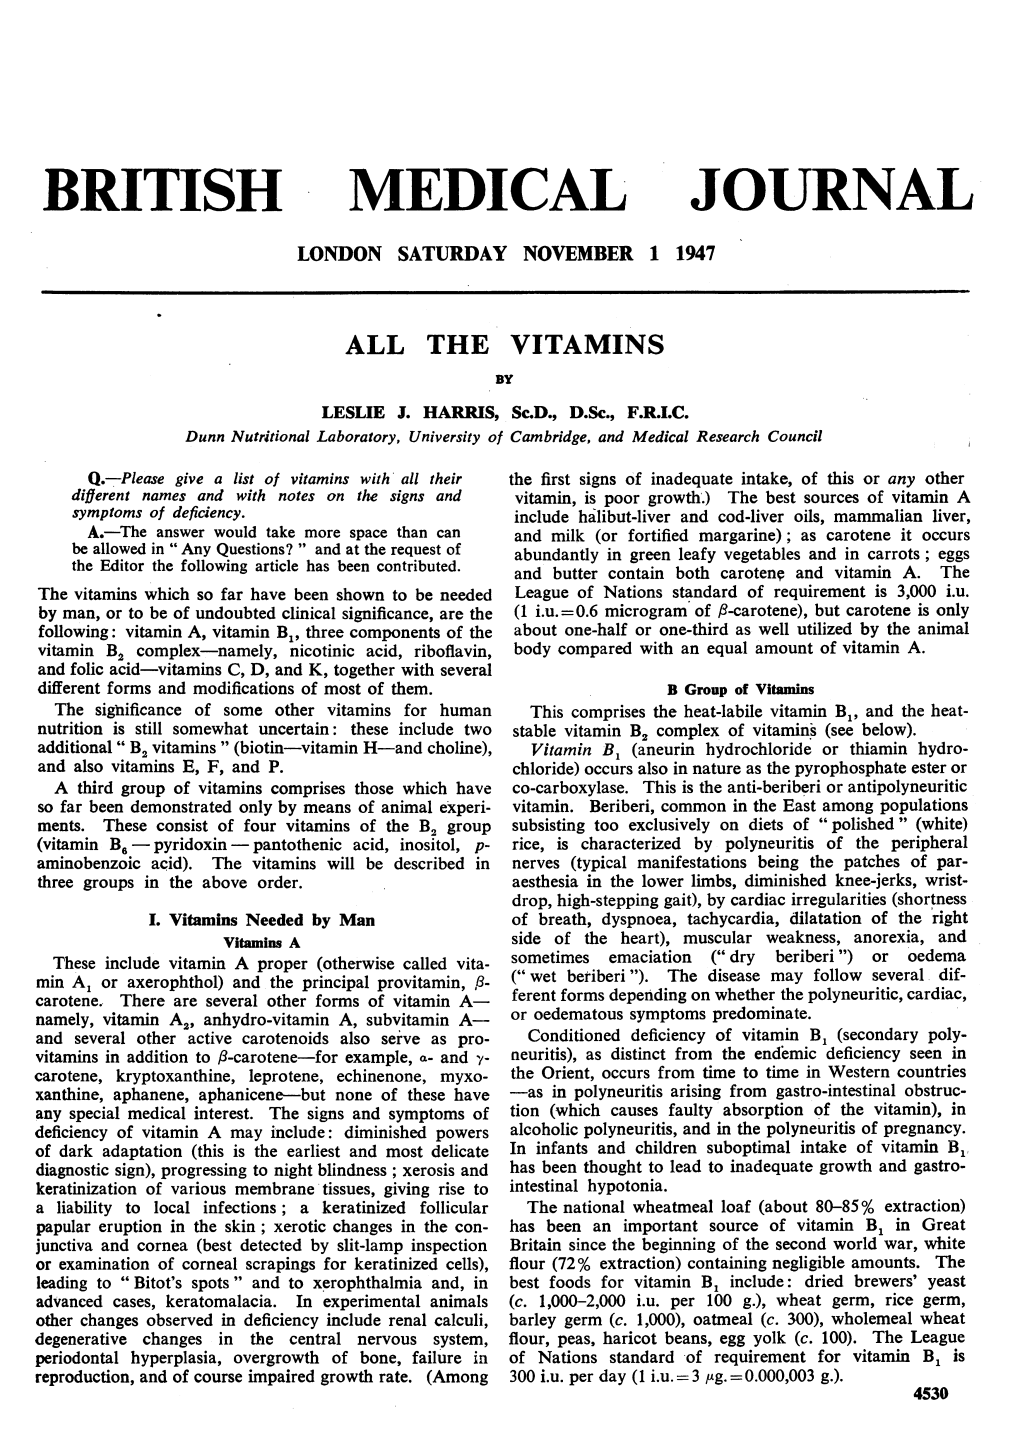 Medical Journal London Saturday November 1 1947